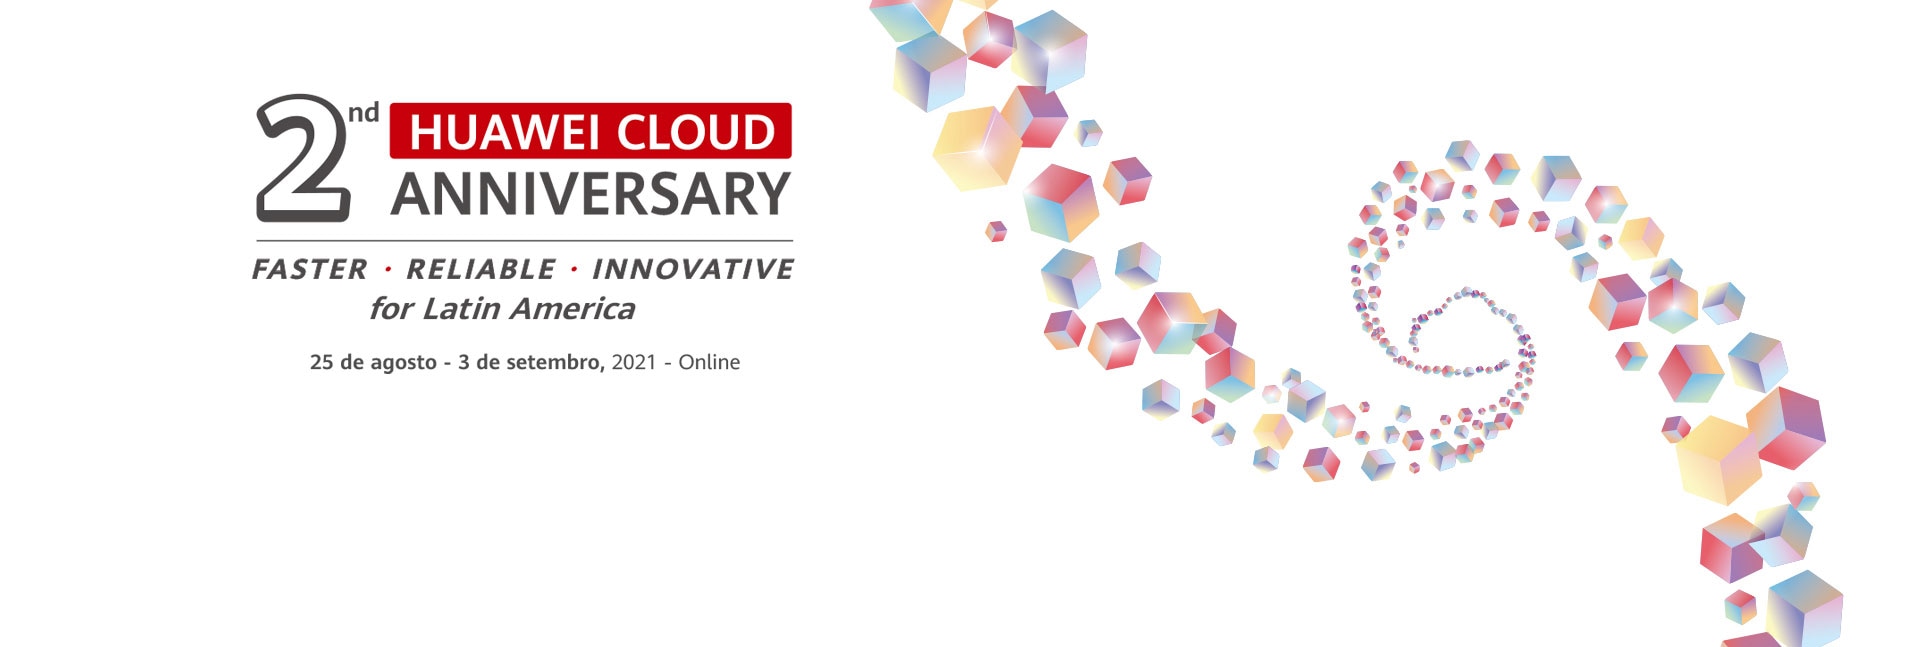 huawei cloud anniversary2021 pc